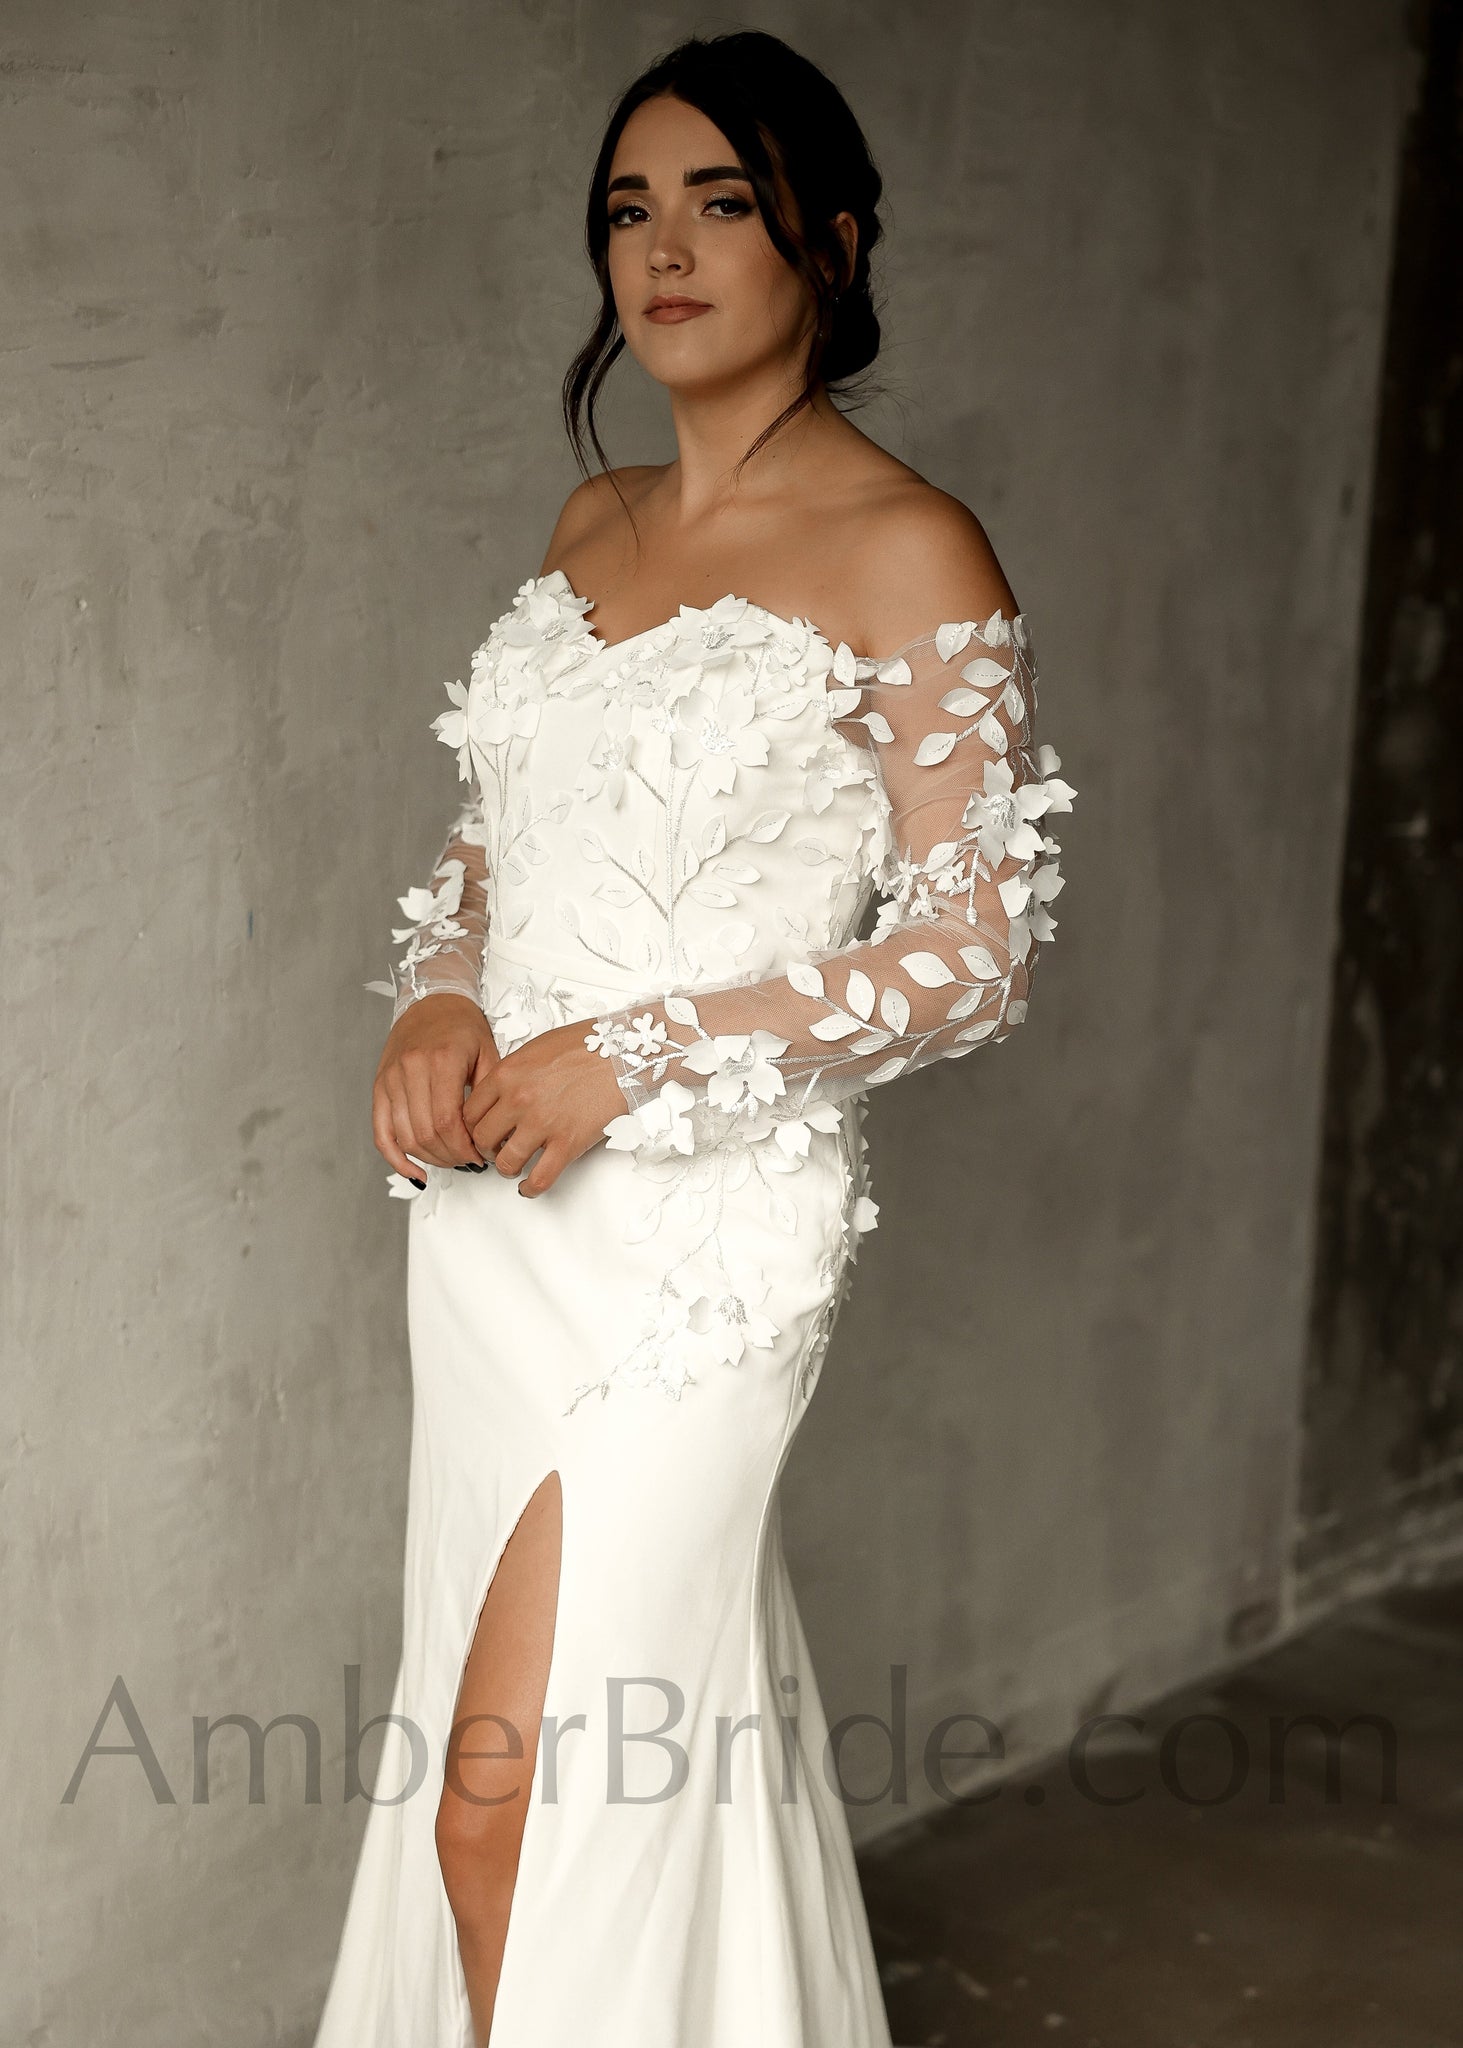 Rustic Mermaid Strapless Crepe Wedding Dress With 3D Flowers - AmberBride